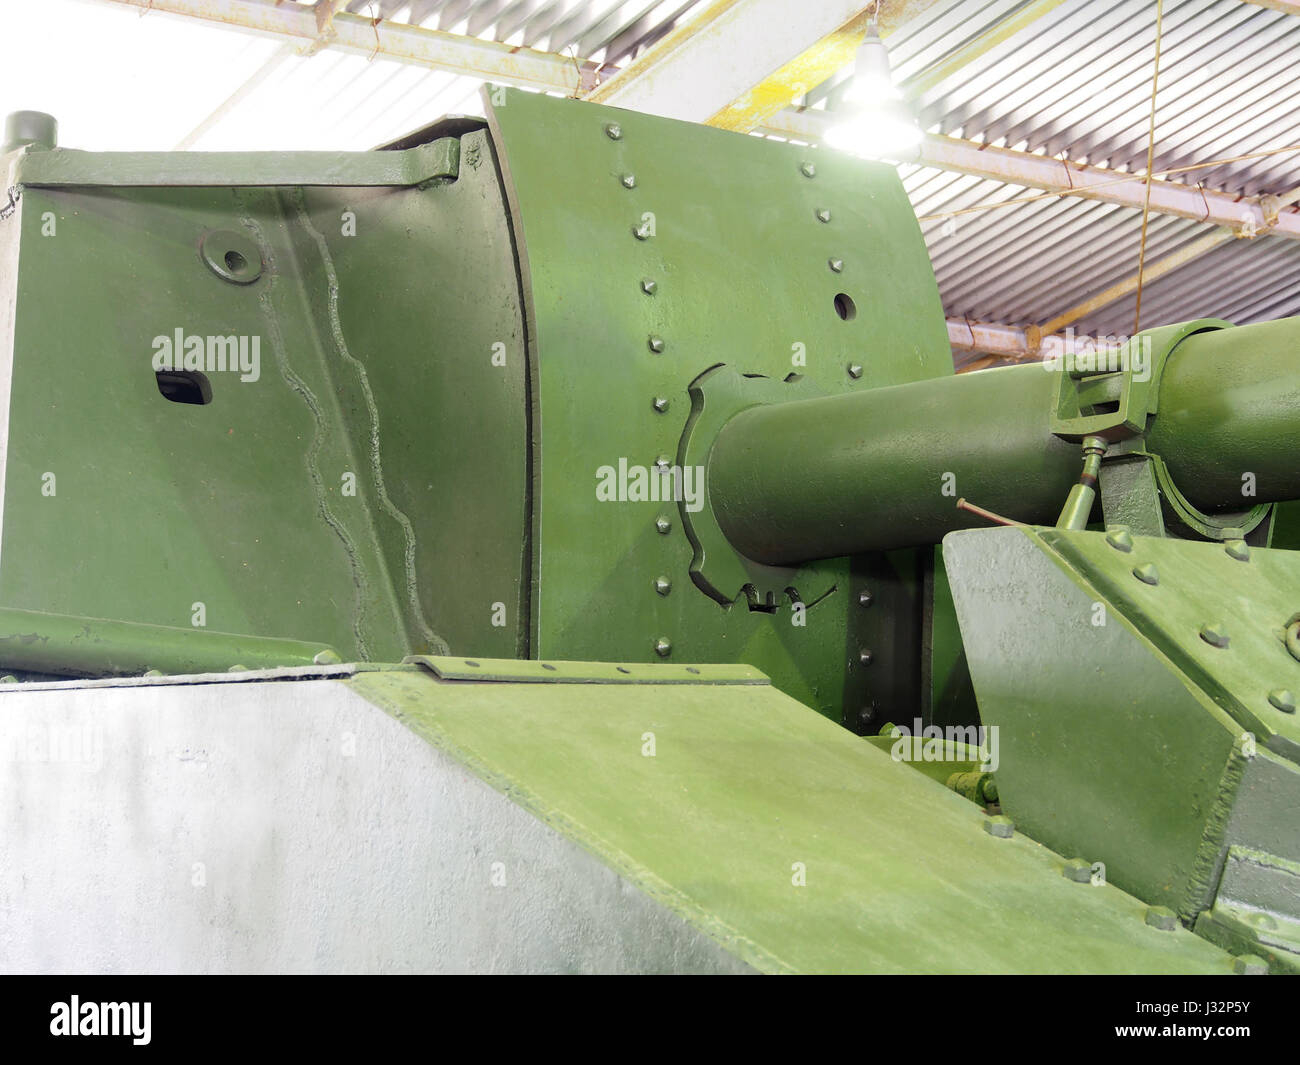 Cамоходная артиллерийская установка СУ-14-2 pic3 Stock Photo